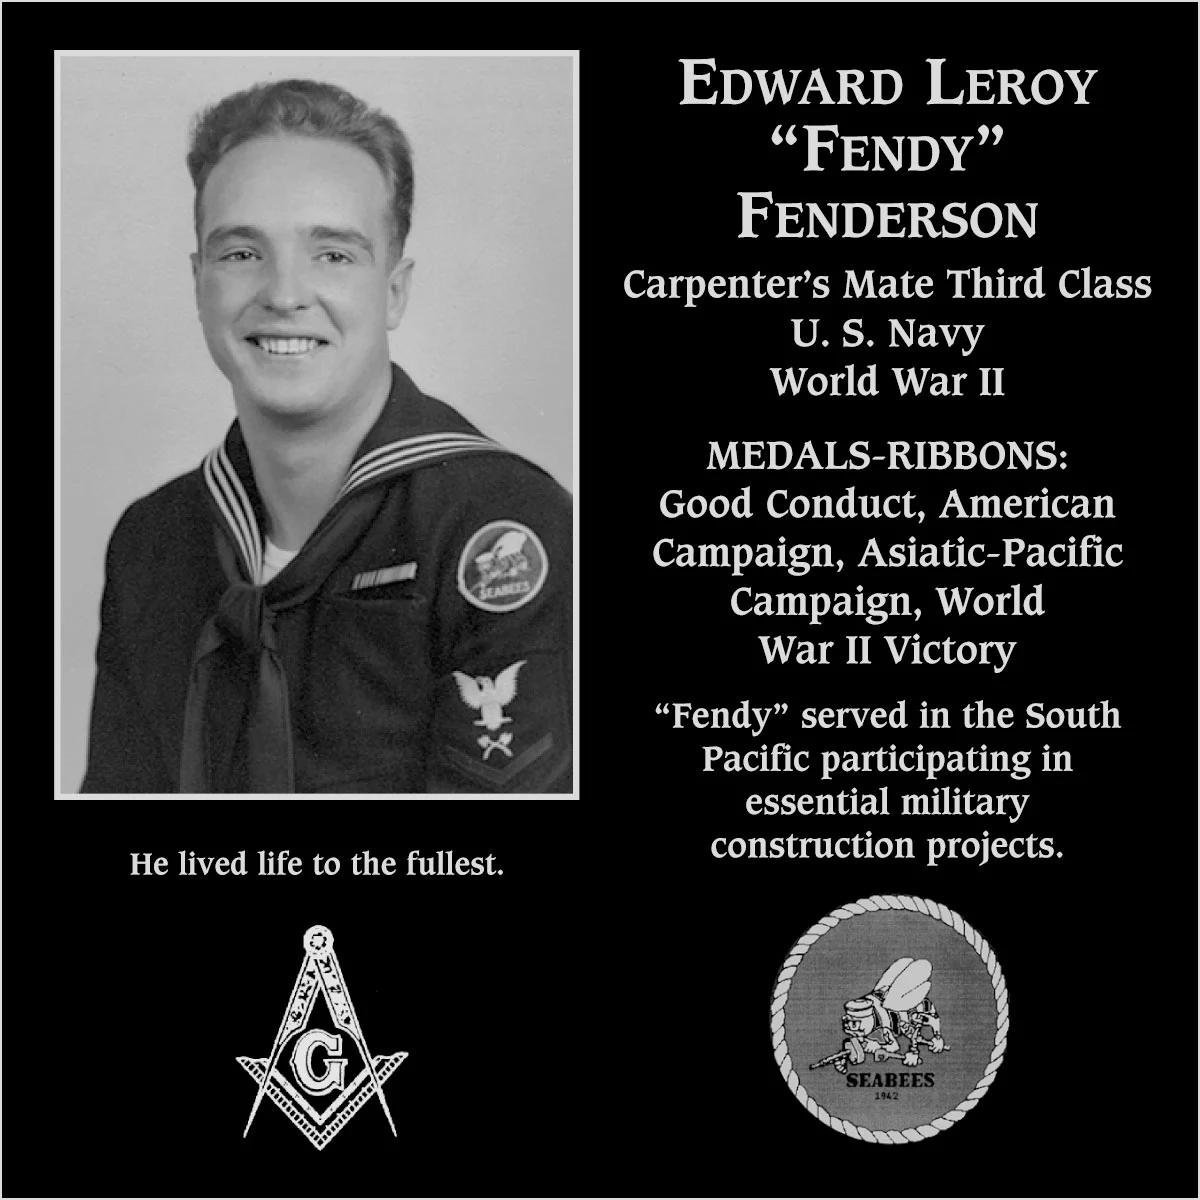 Edward Leroy “Fendy” Fenderson